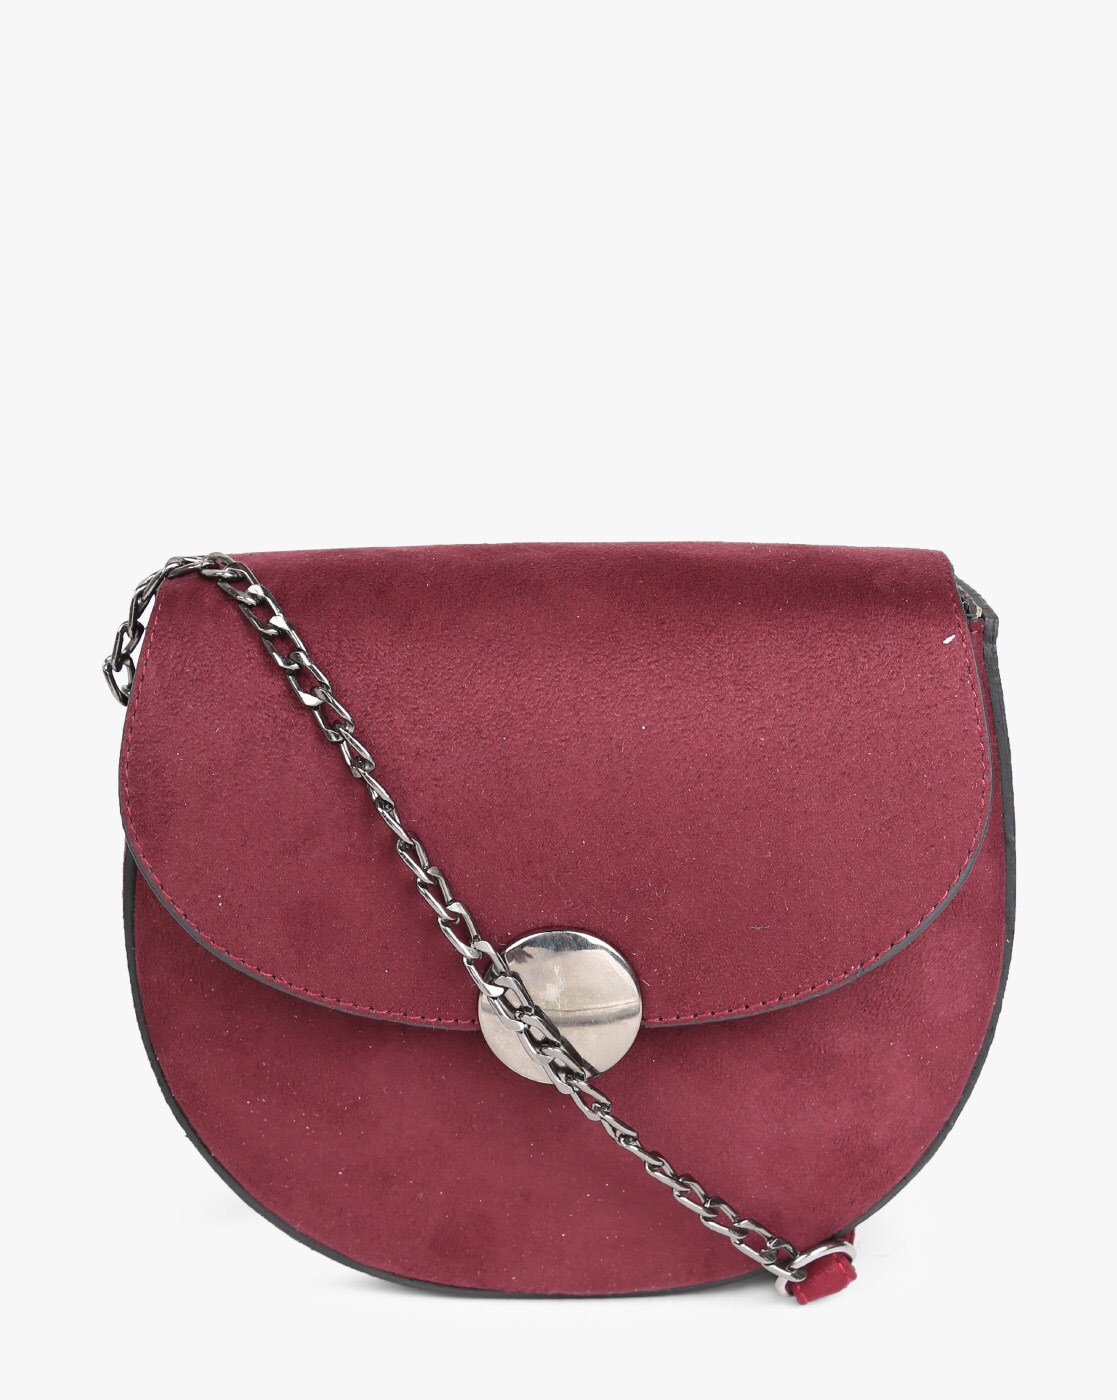 Amazon.com: AurDo Genuine Italian Leather Shoulder Tote Bag for Women Large  Handbag Work Purse - Burgundy : Clothing, Shoes & Jewelry